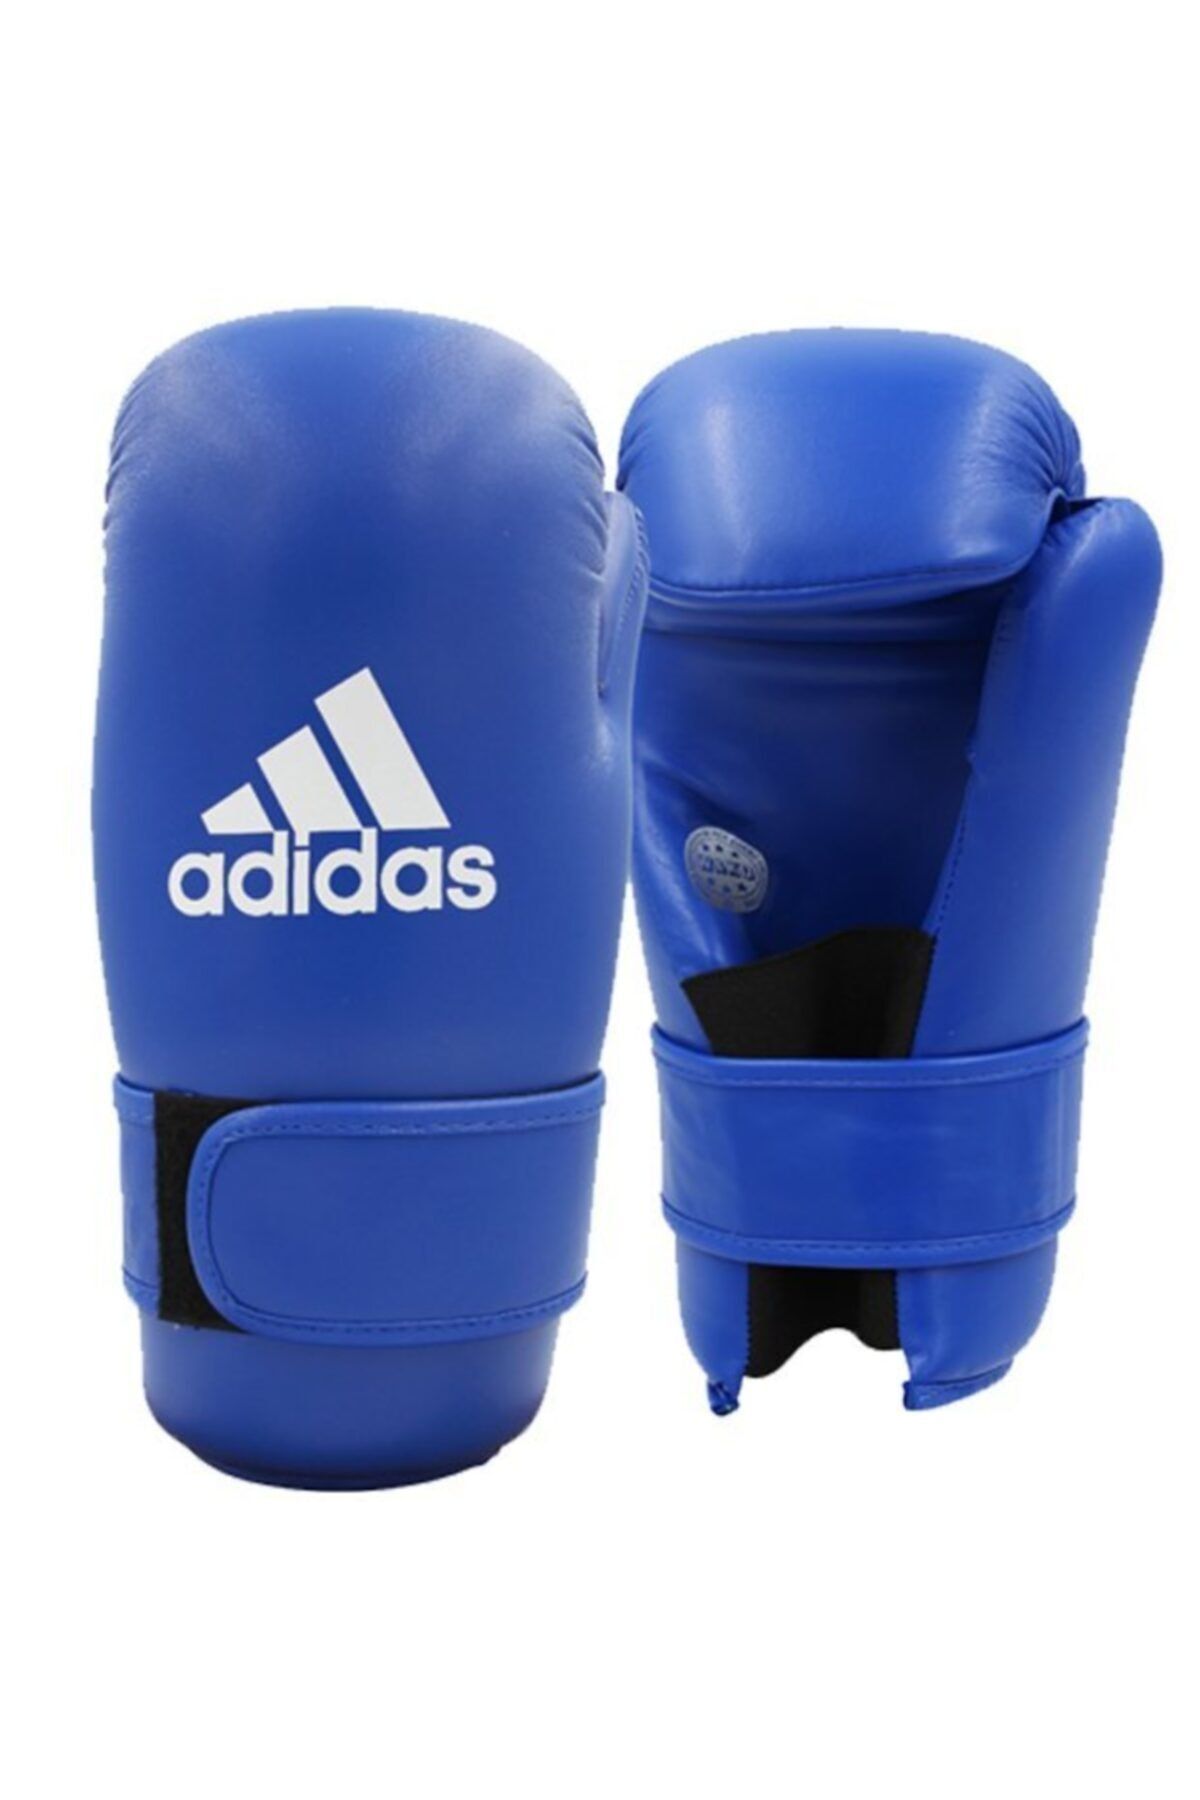 adidas Wako Onaylı Kickboks Semi Contact Eldiveni Point Fight Eldiveni Kickboxing Gloves Adıwakog3